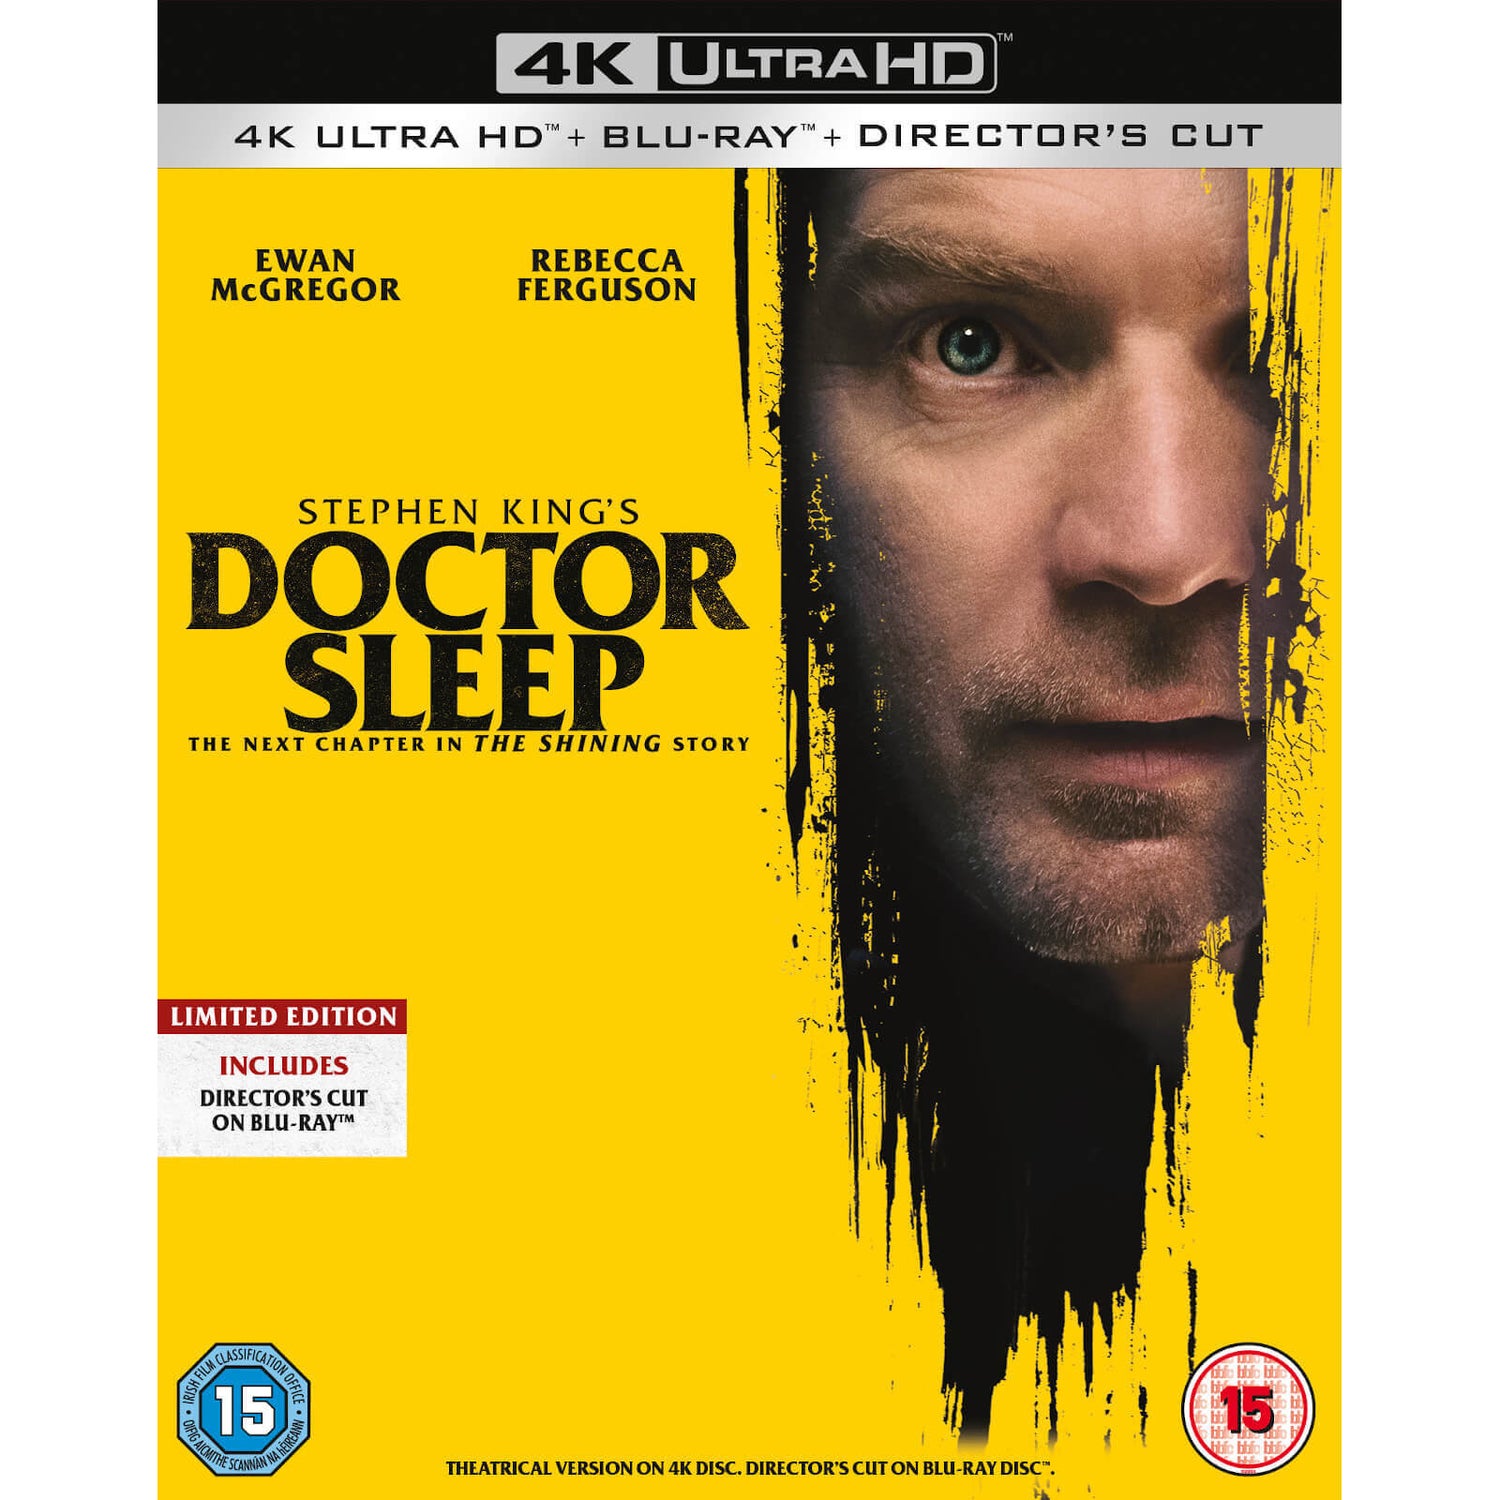 Stephen King’s Doctor Sleep - Limited Edition 4K Ultra HD